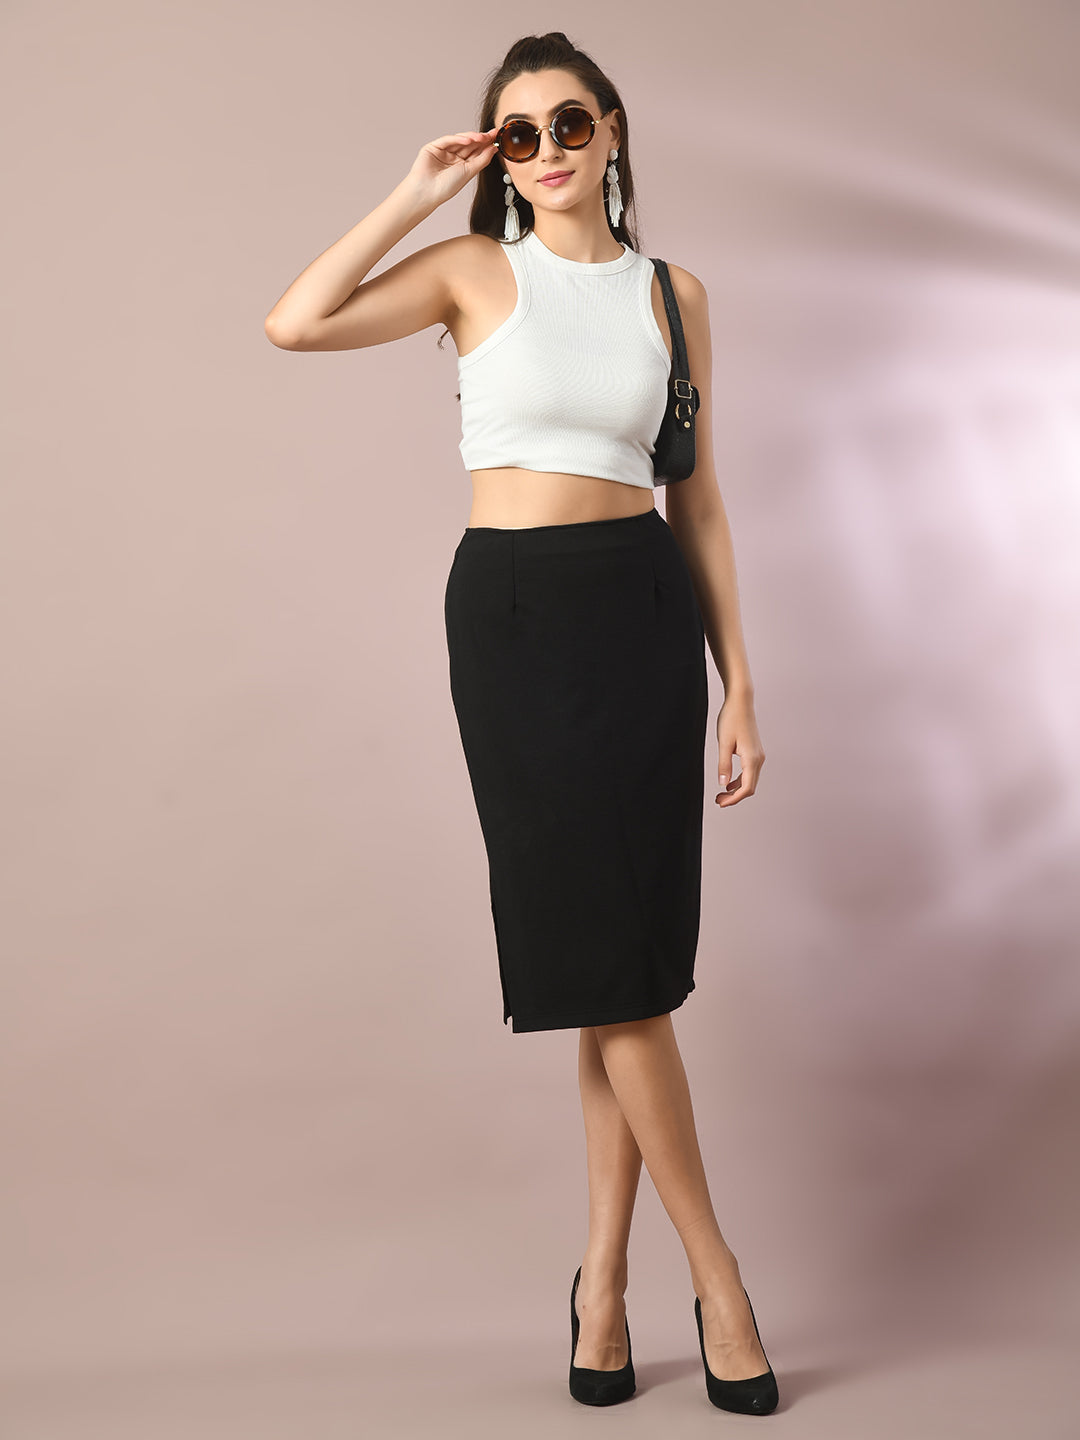 Women's  Black Solid Knee Length Party Embellished Skirts   - Myshka